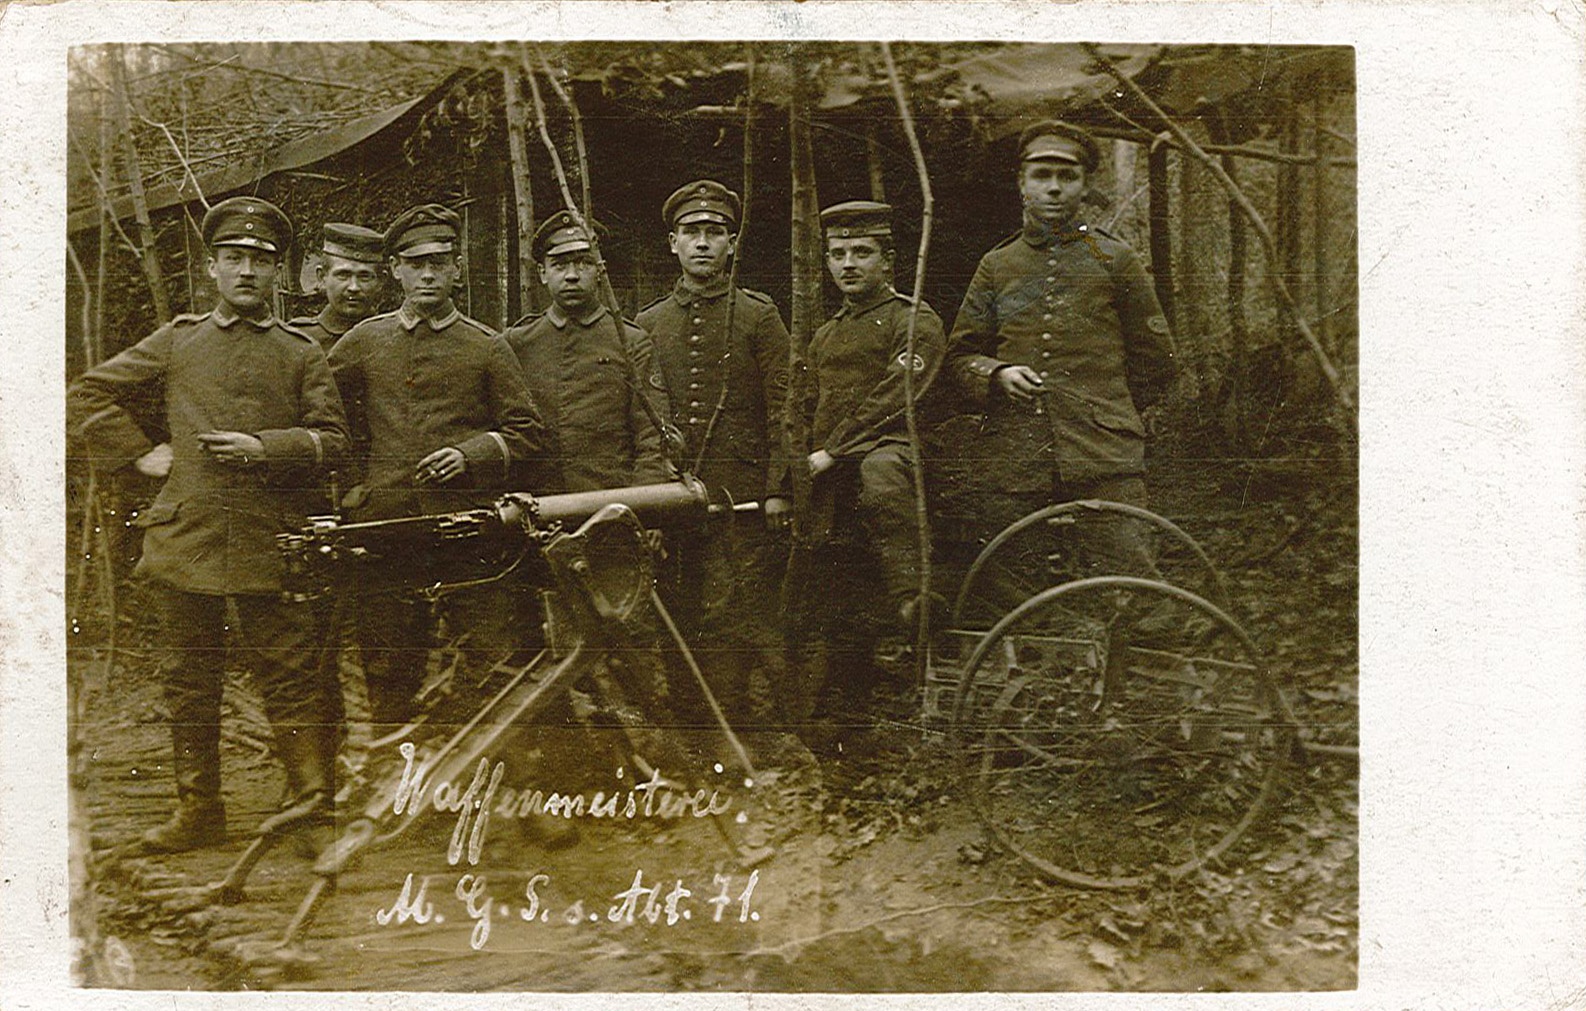 Fotopostkarte mit Soldatengruppe der &quot;Waffenmeisterei M.G.S. s. Abt. 71&quot; (Museum Wolmirstedt RR-F)